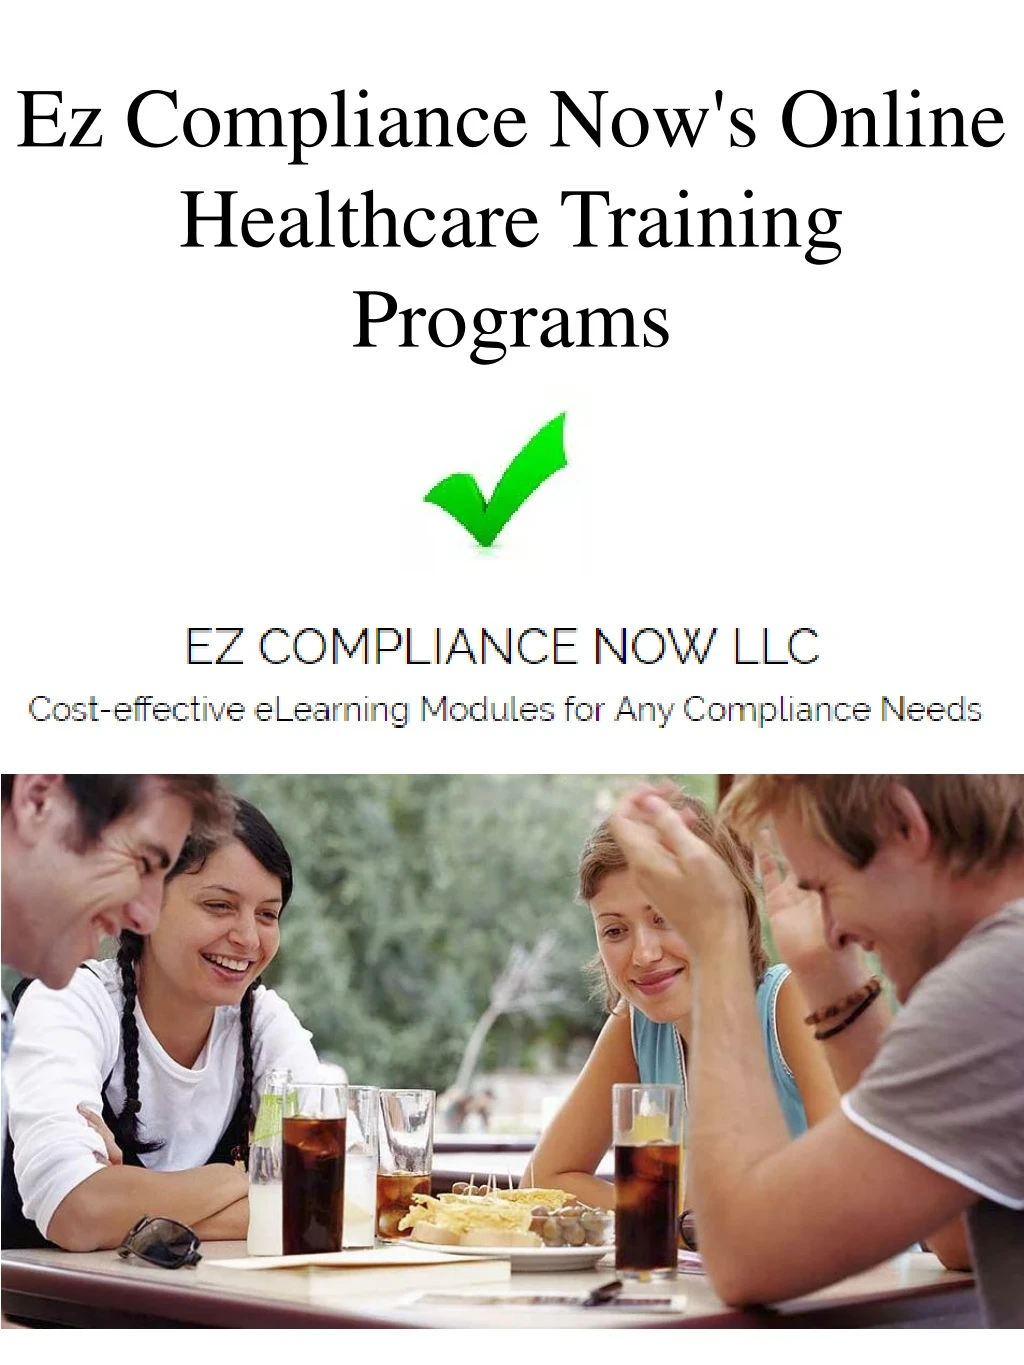 ez compliance now s online healthcare training programs